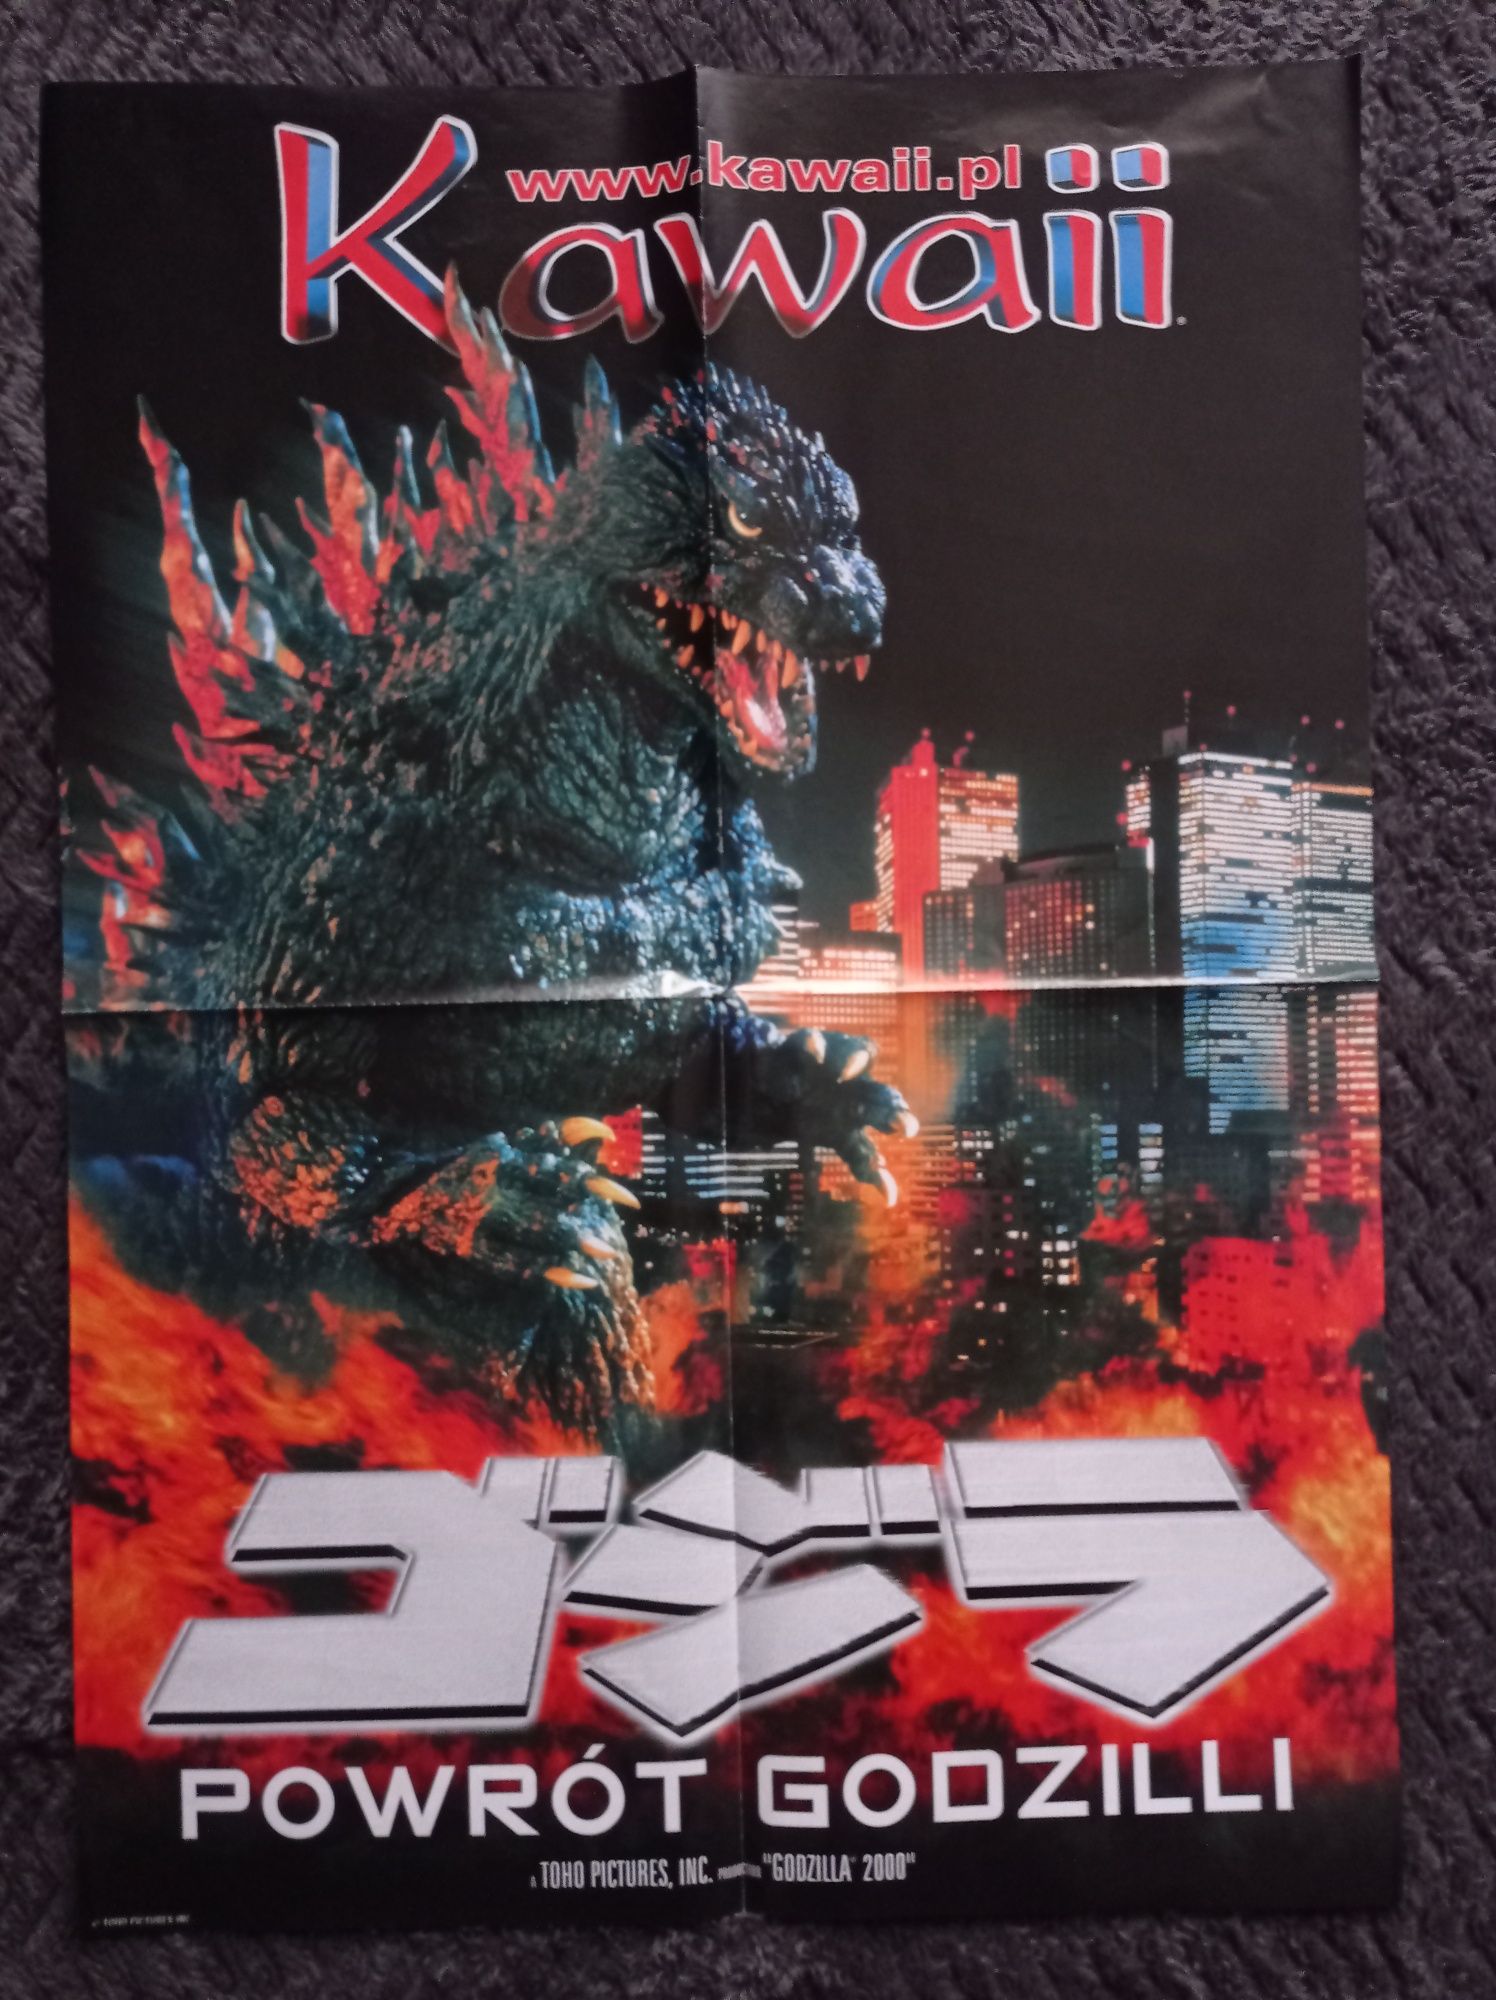 Plakat Kawaii  Dragon Ball i Godzilla